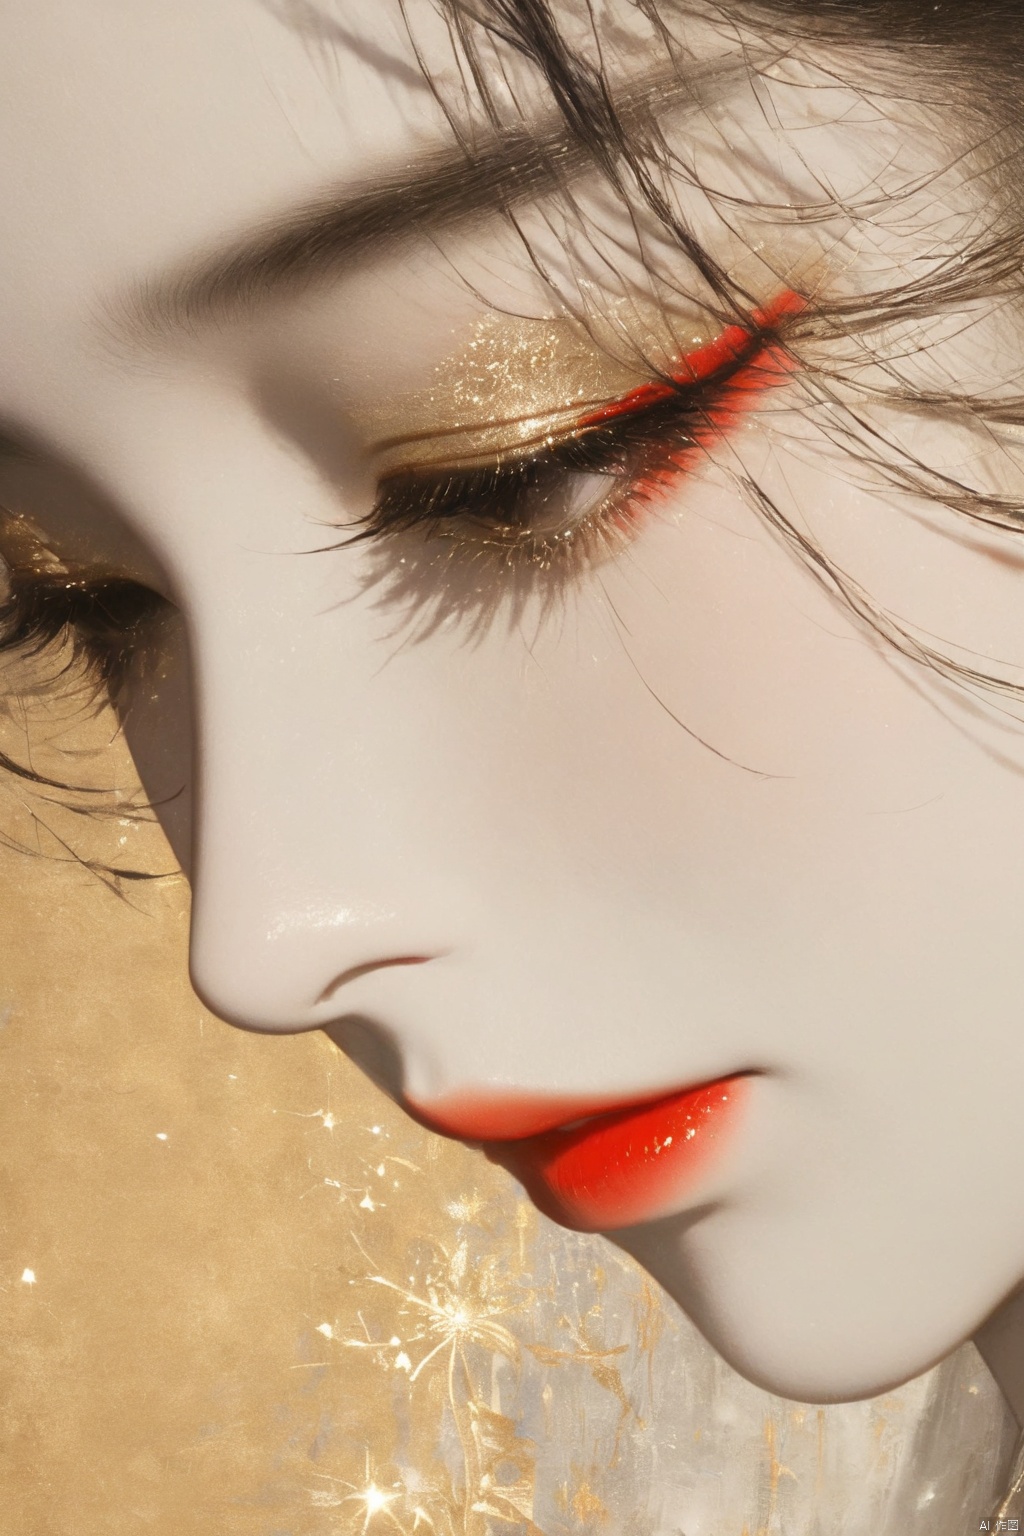 1 Girl, close-up, red lips, long eyelashes, beautiful sad wallpaper style
